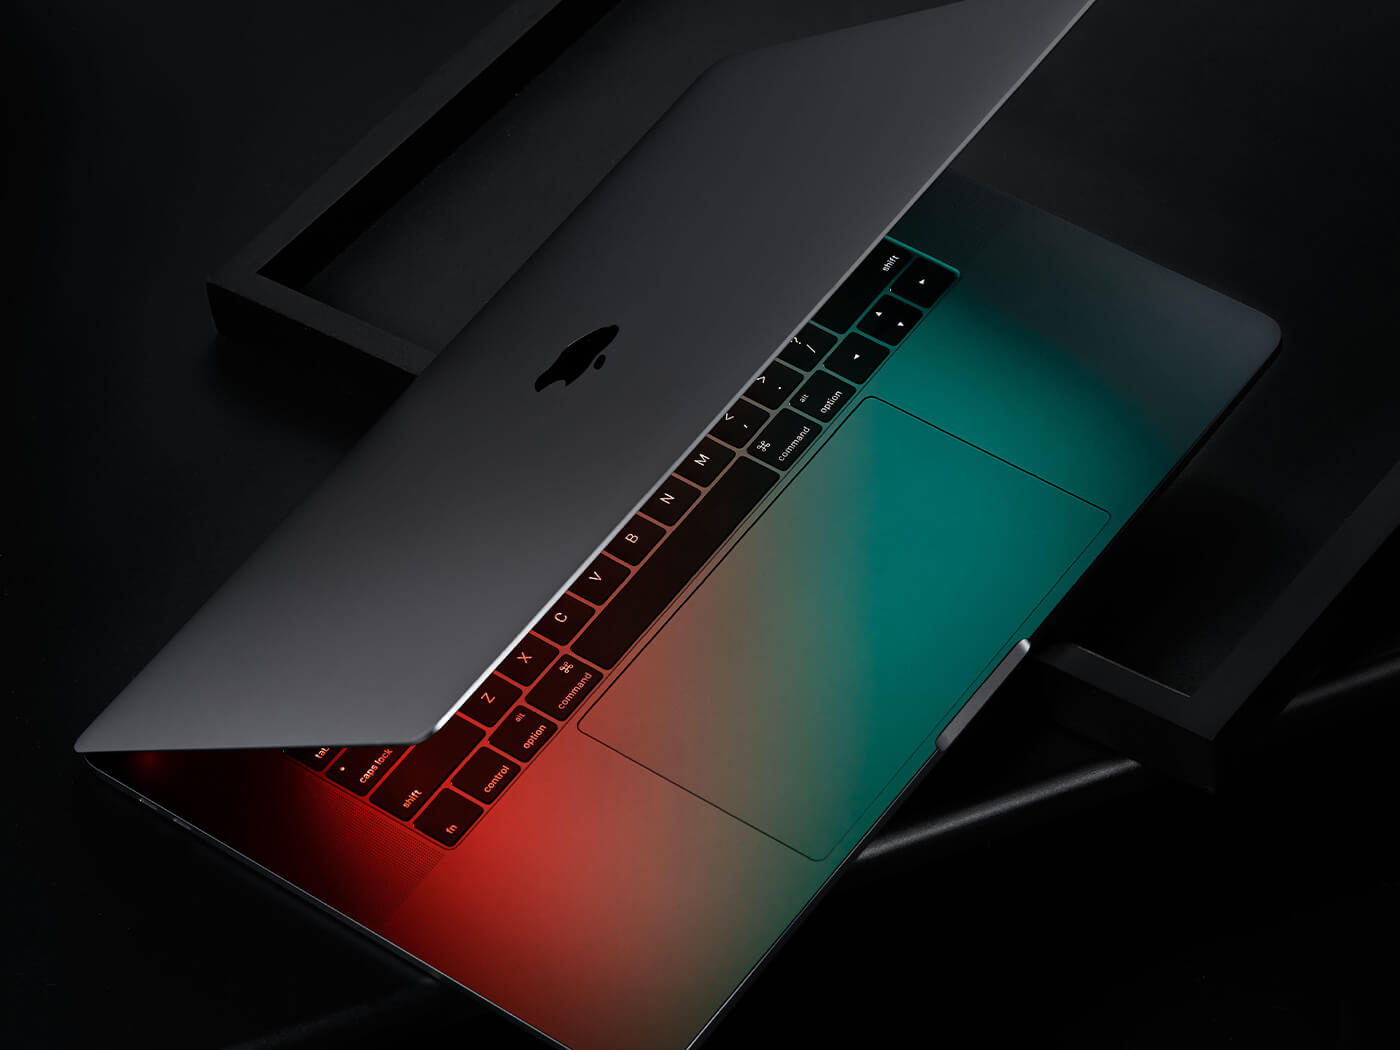 M1X Mac - The New MacBook Pro